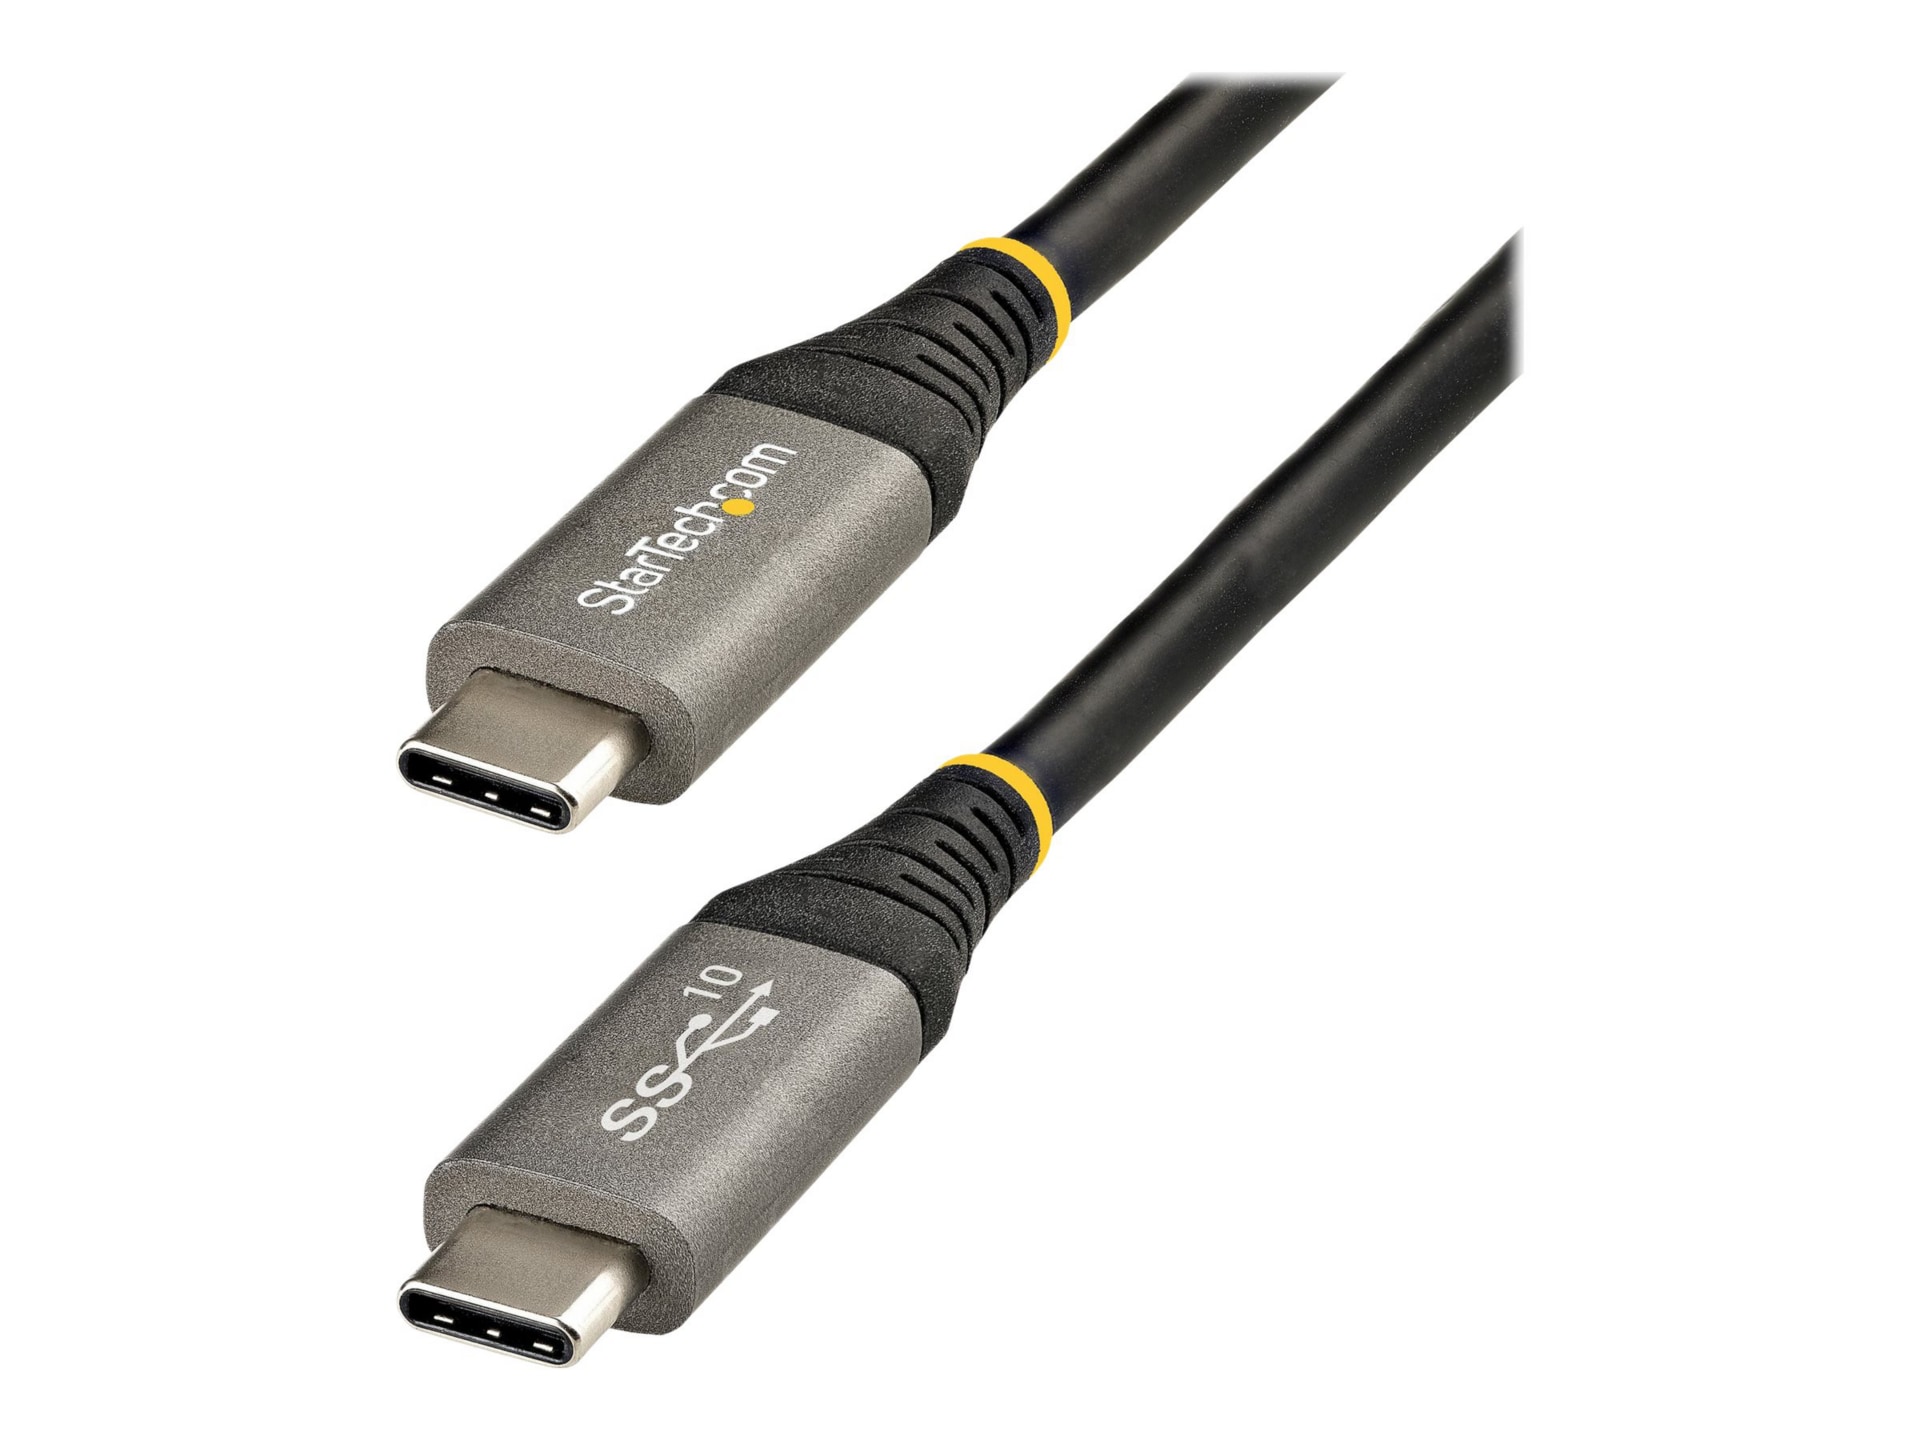 StarTech.com 6ft 2m USB C Cable, High Quality USB-C Cable, USB 3.0 (5Gbps) Type-C Cable, 5A/100W PD, DP Alt Mode, USB C